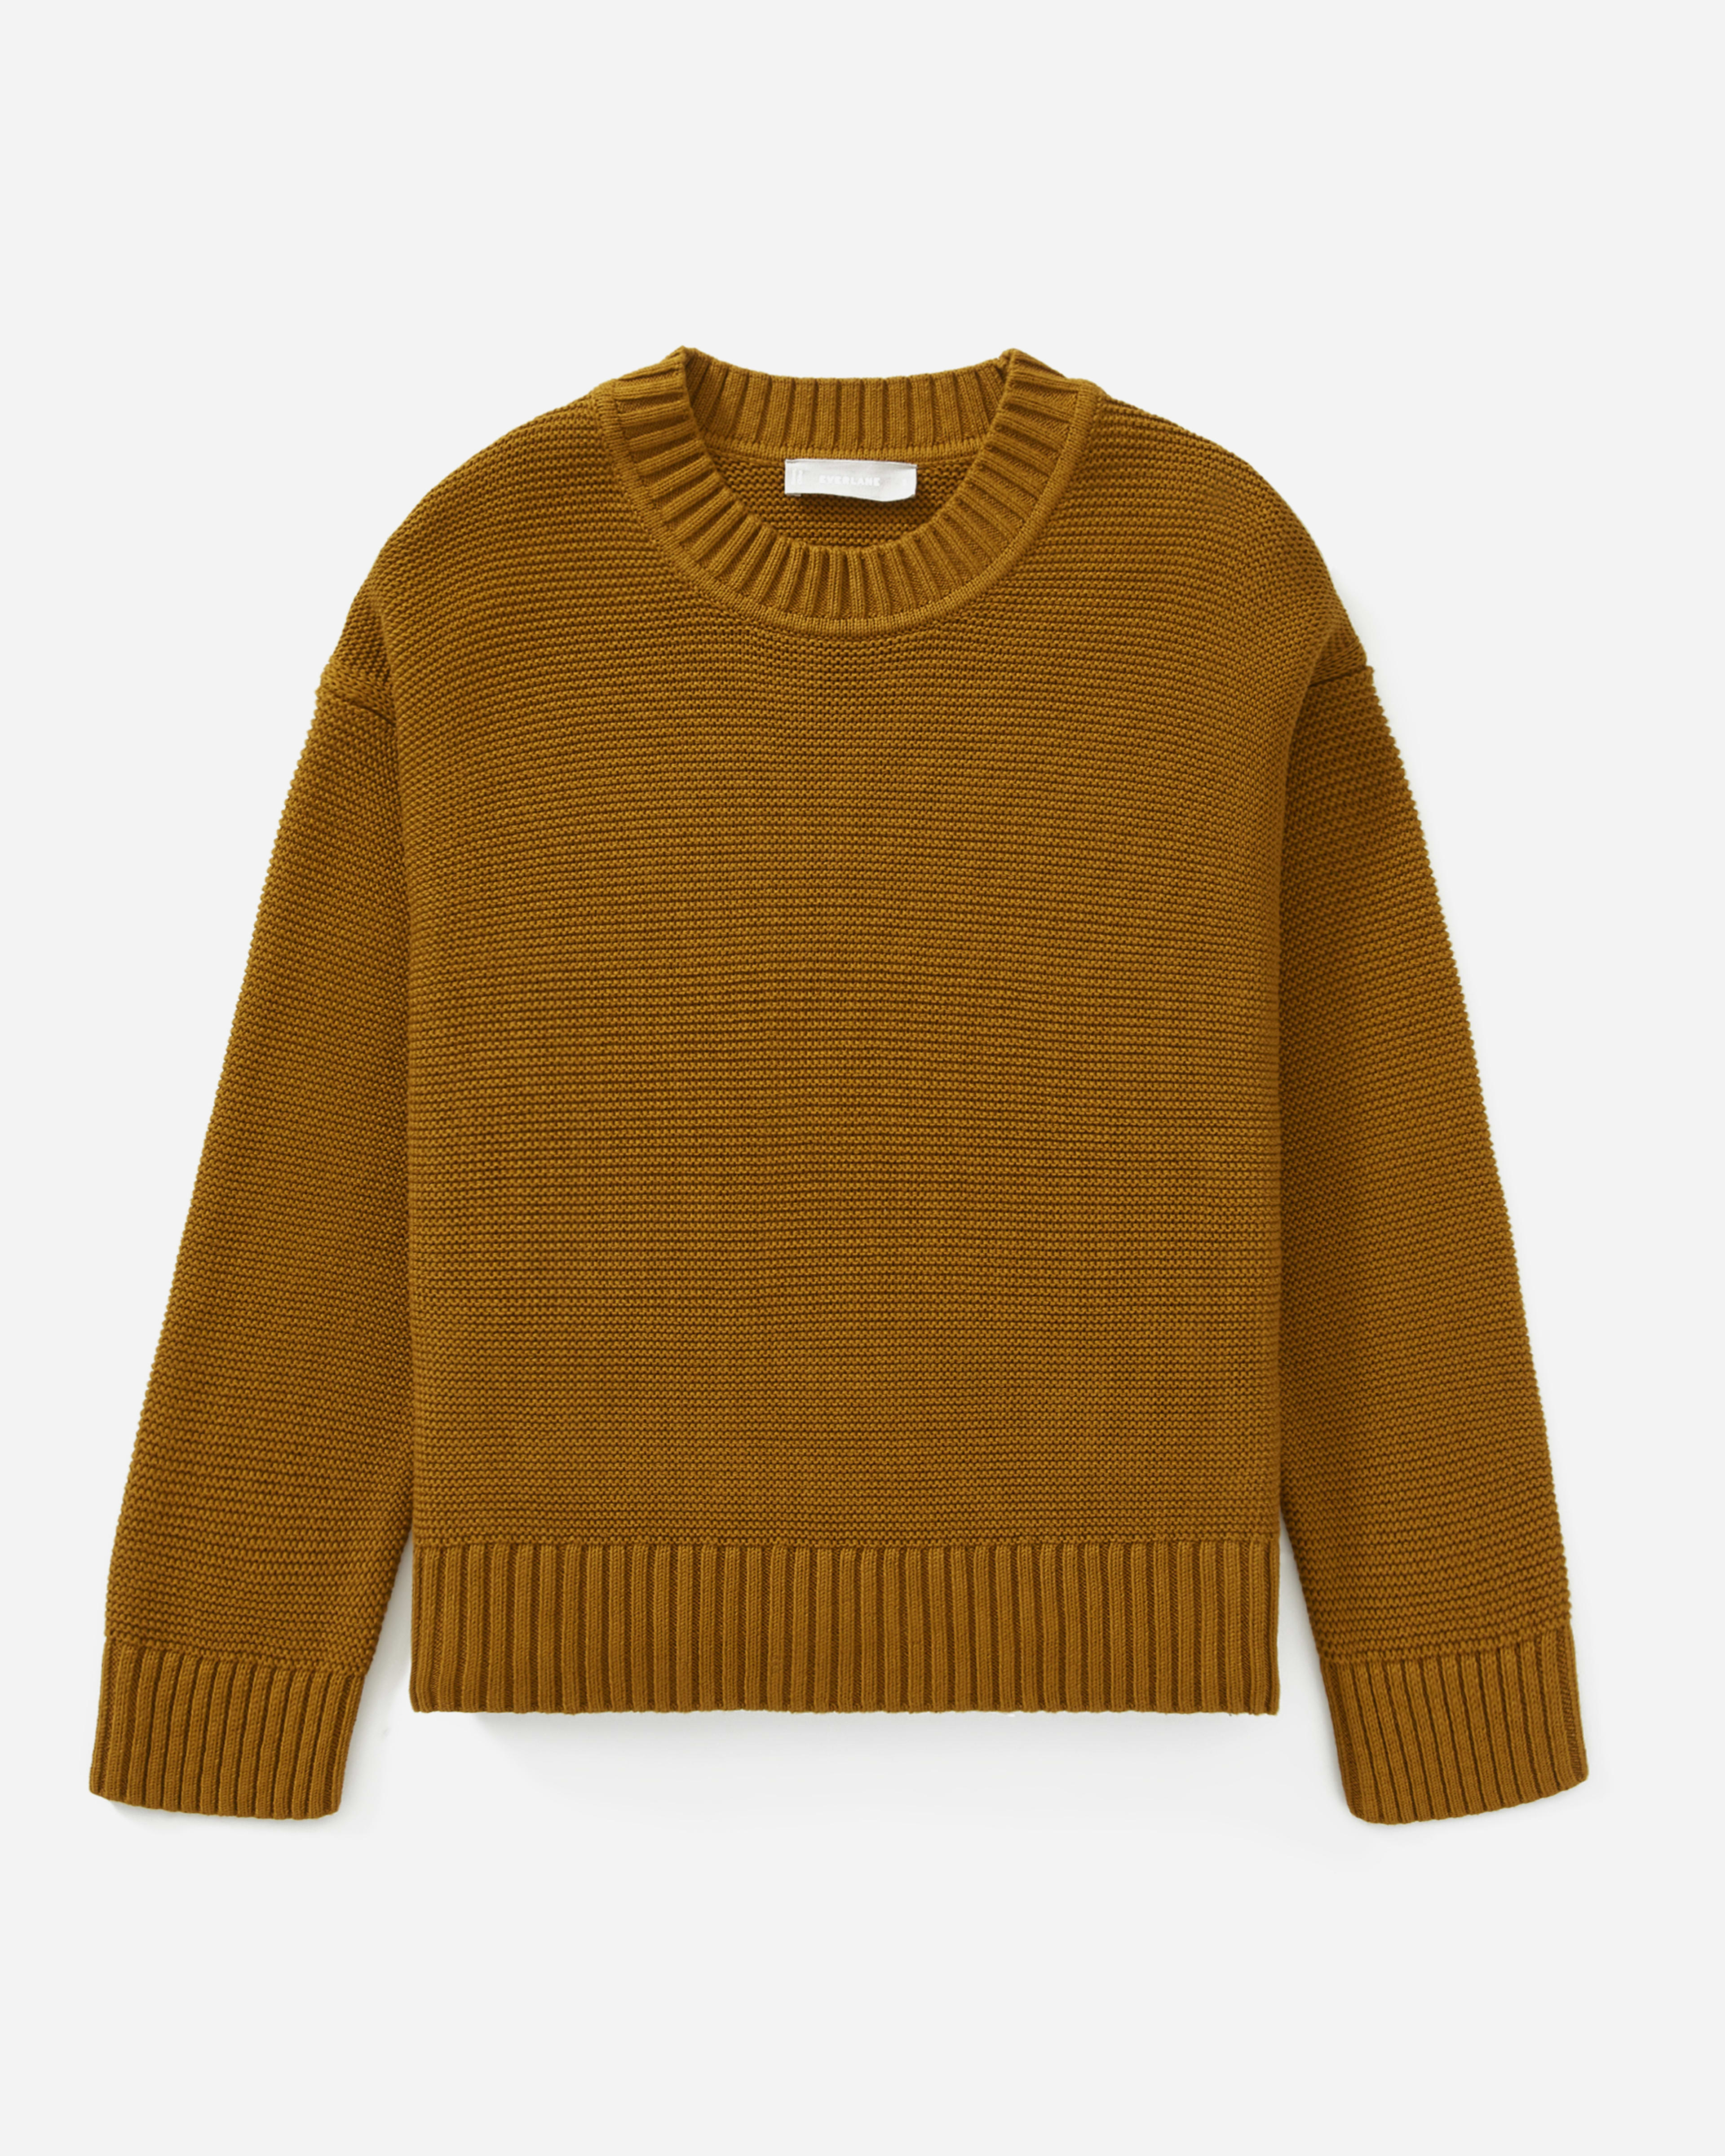 The Link-Stitch Crewneck Sweater Brass – Everlane